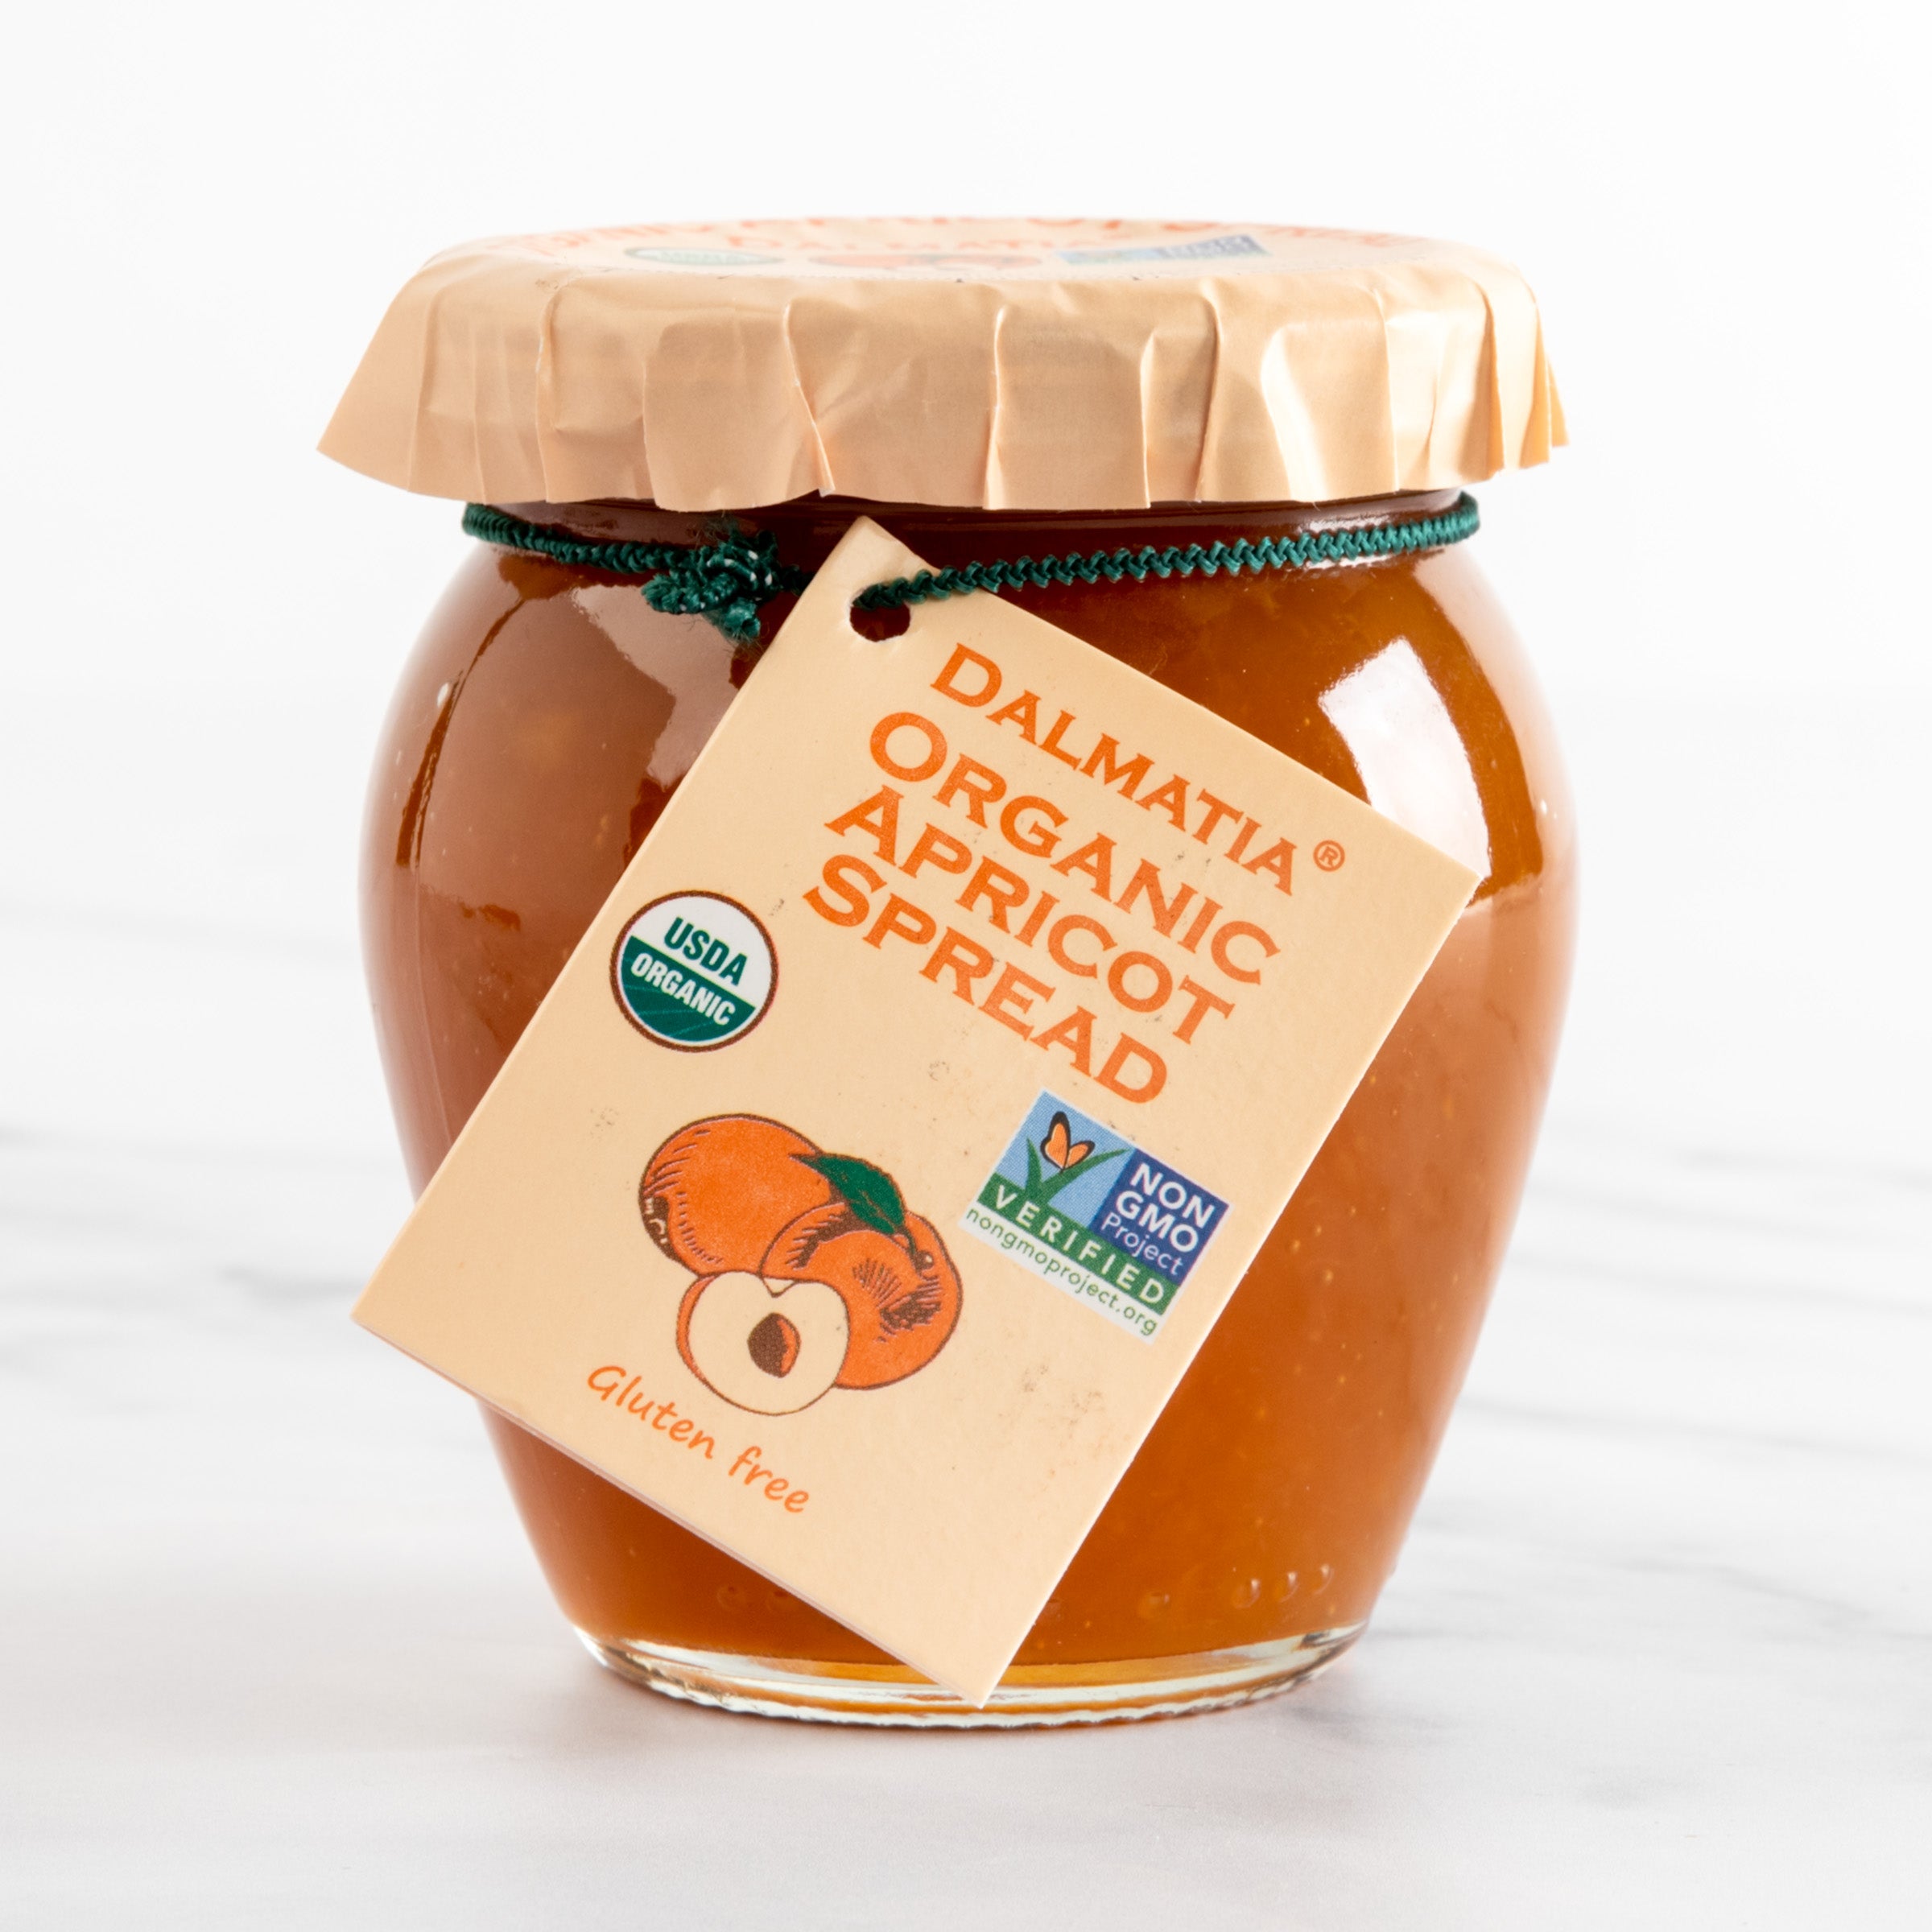 igourmet_6646_Organic Apricot Spread_Dalmatia_Jam, Preserves & Nut Butter